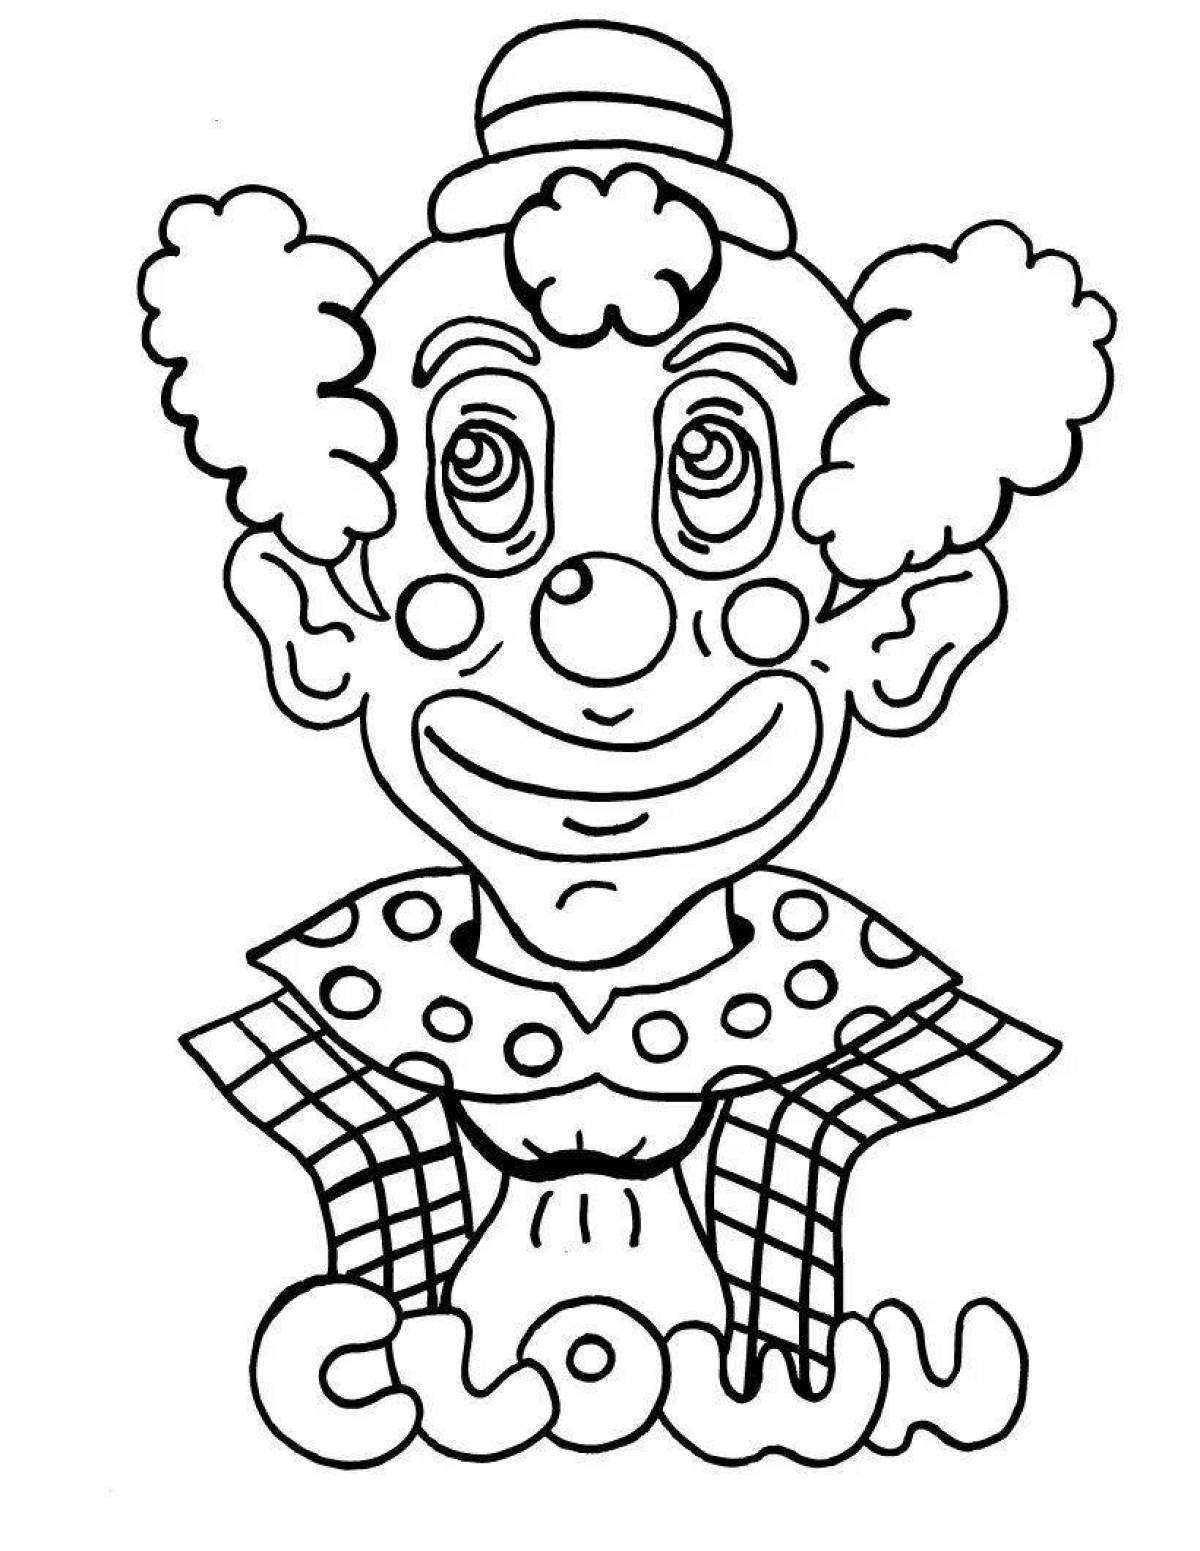 Zani the clown coloring book for kids